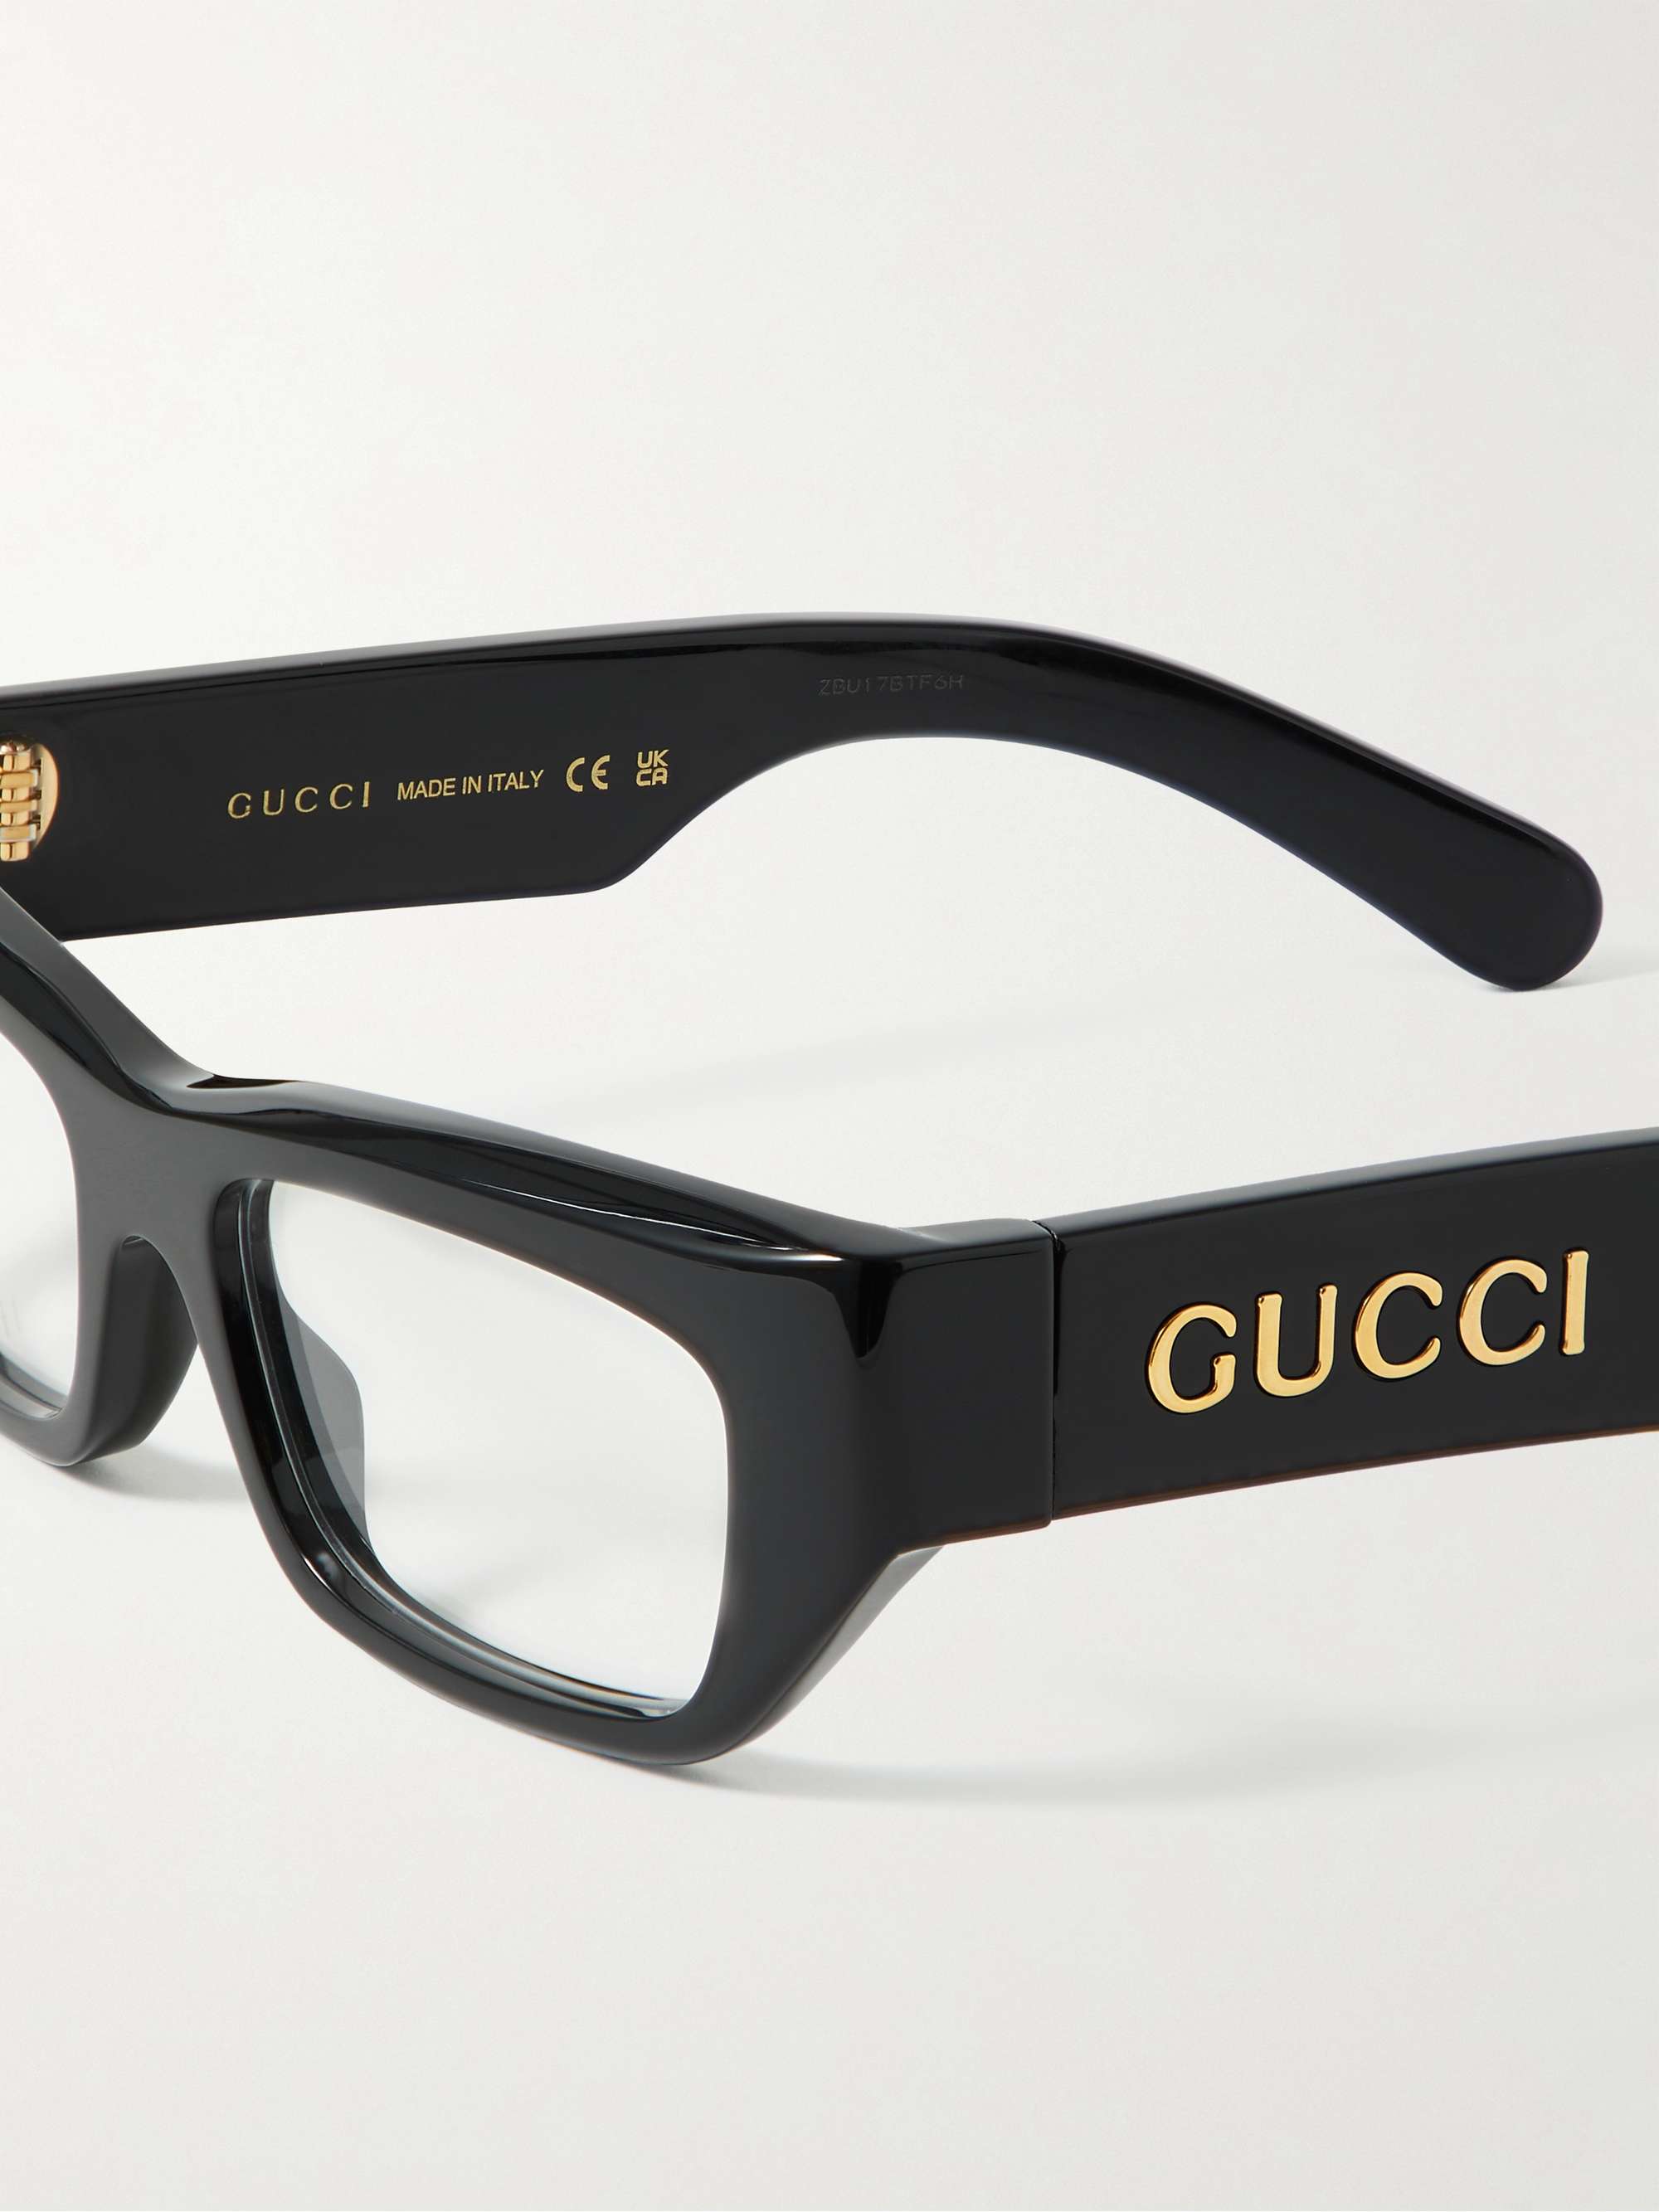 GUCCI EYEWEAR Rectangular-Frame Acetate Optical Glasses for Men | MR PORTER